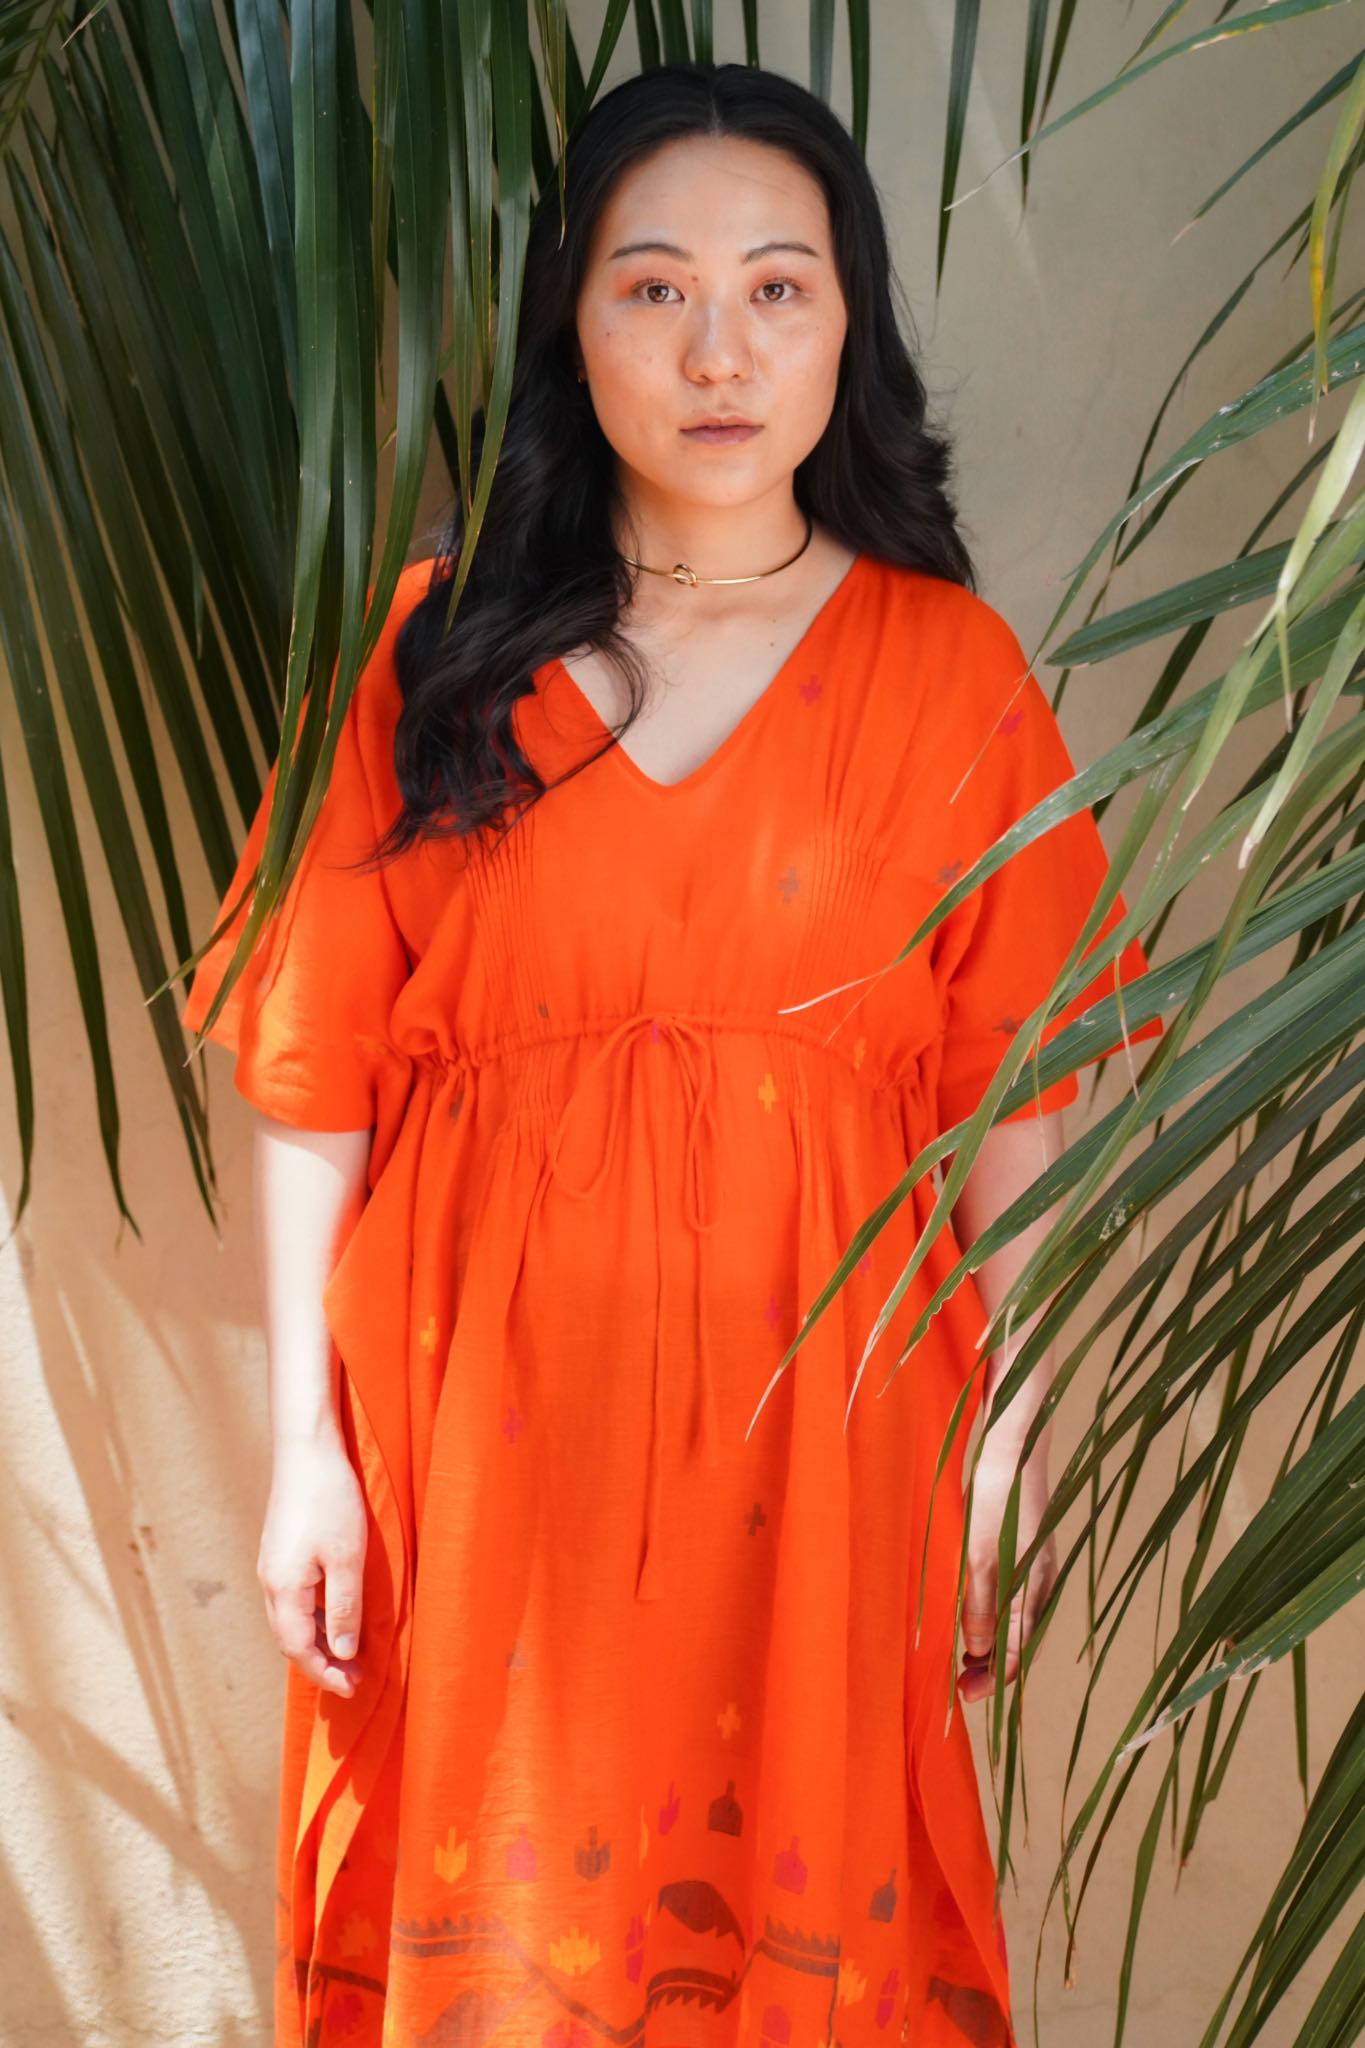 Bora Bora Orange Kaftan Dress with pintucks and drawstring waist - Full